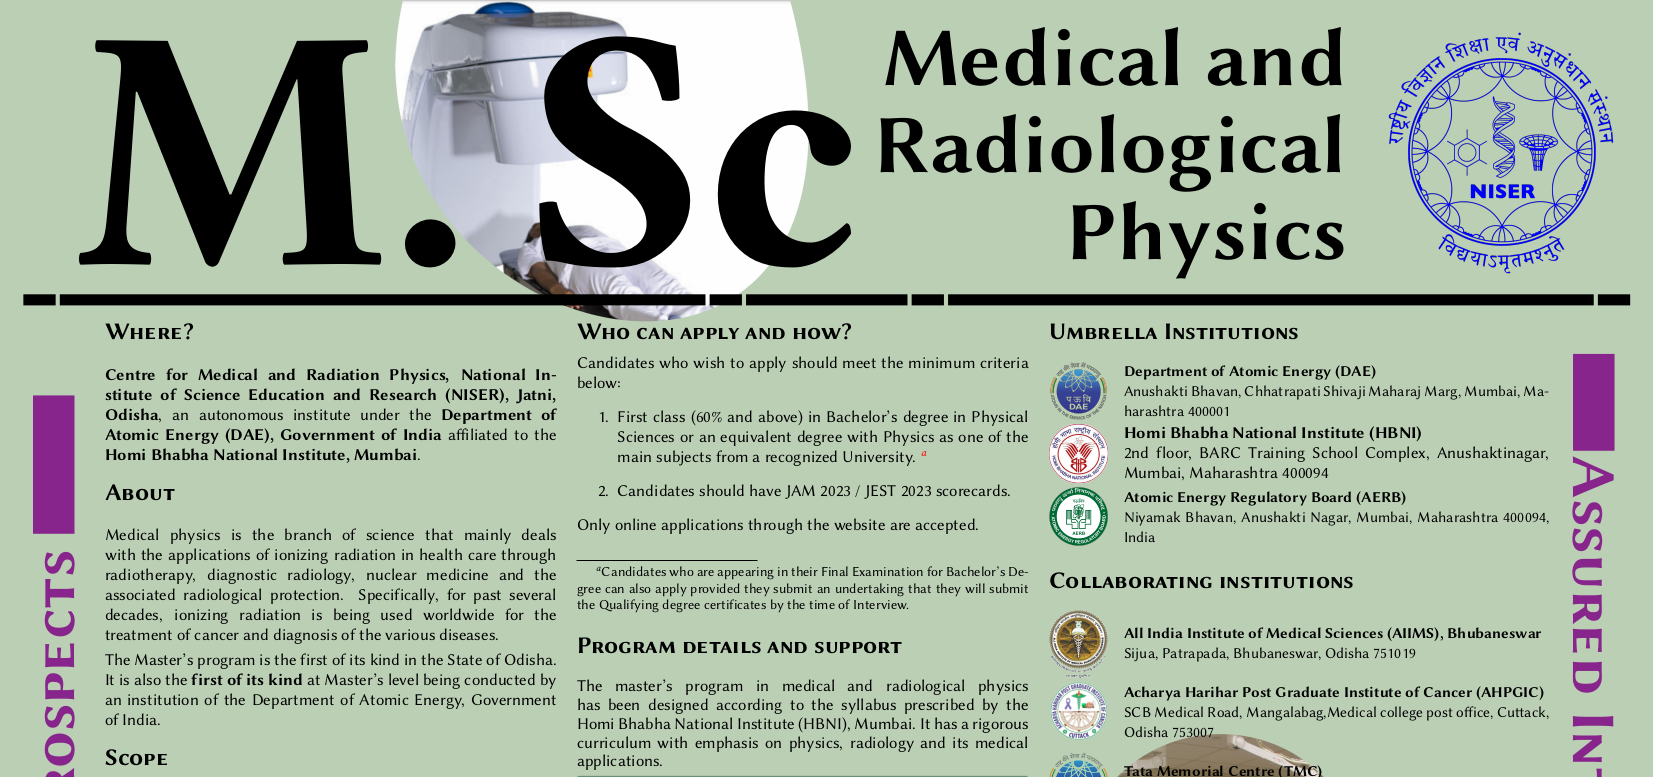 Medical and Radiological Physics